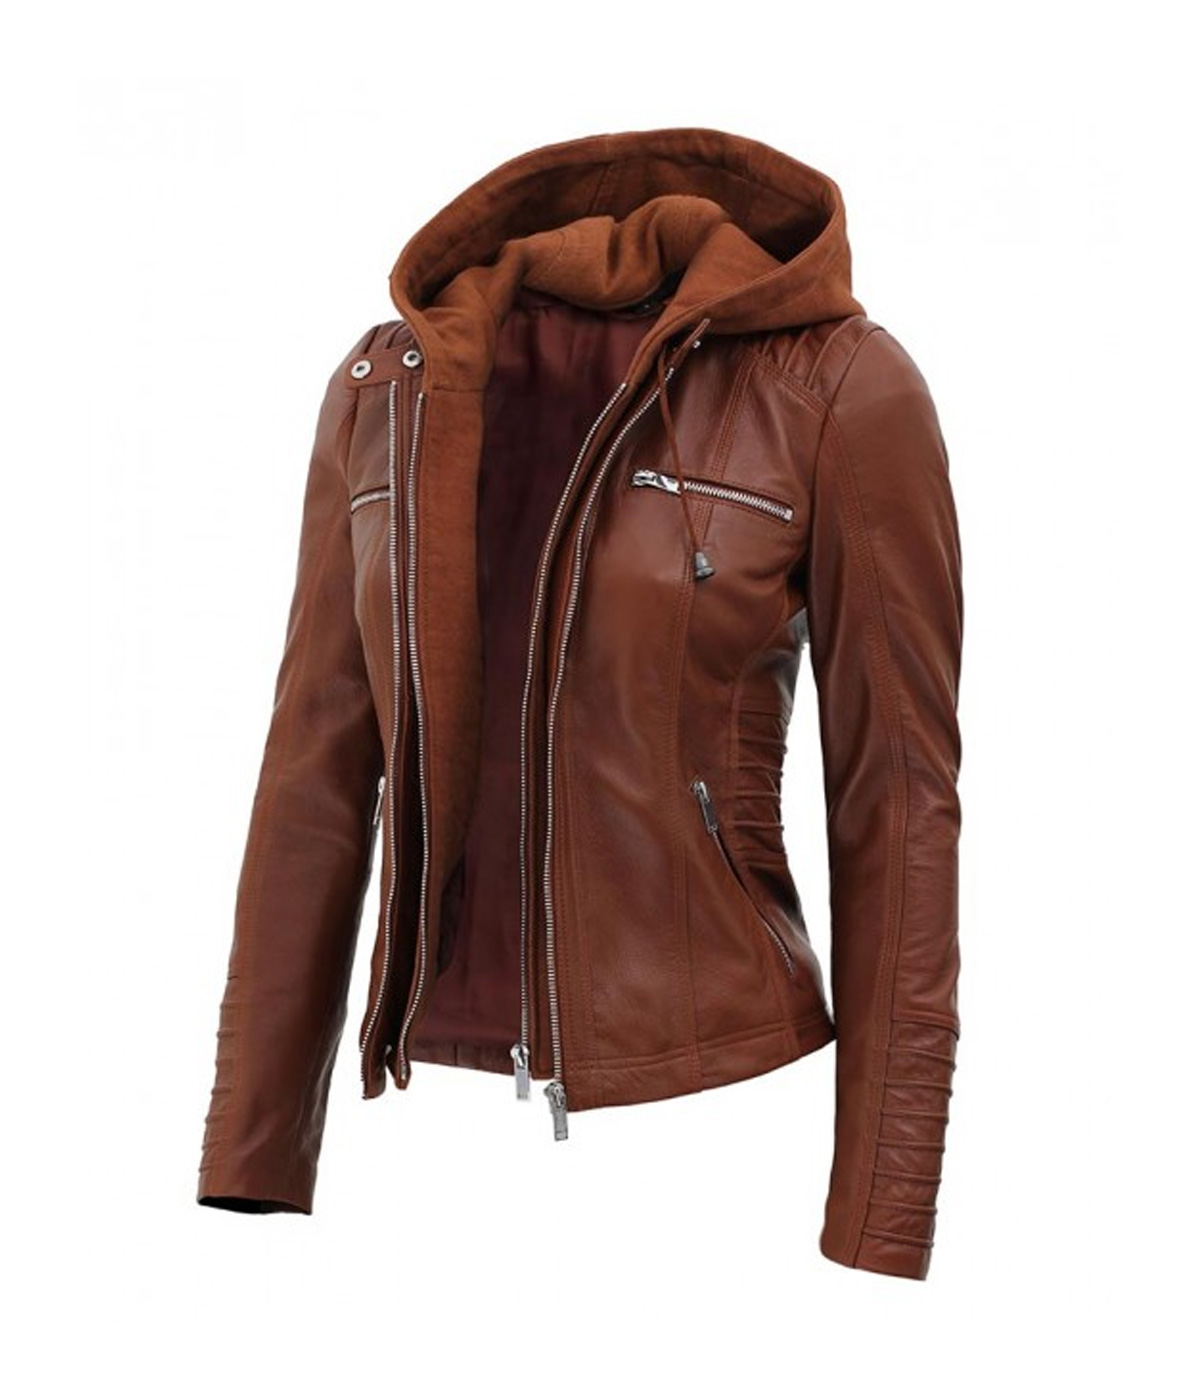 Women's Hooded Style Leather Jacket | Next Leather Jackets